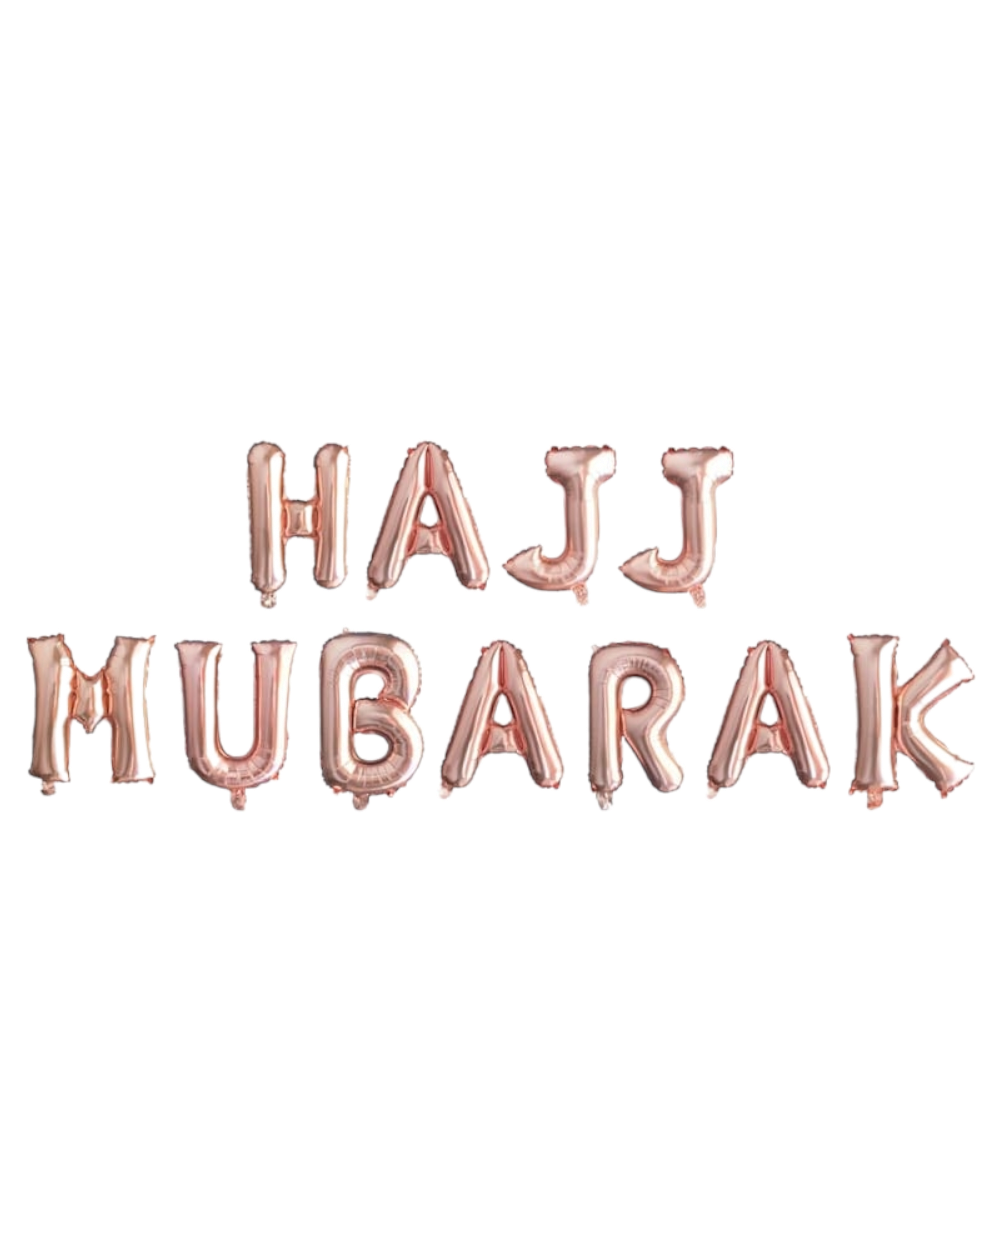 Hajj Mabroor, Hajj Moubarak, Bannière du Hajj, Bannière de la Omra,  Décorations du Hajj, Décor du Hajj, Décorations de la Omra, Décor de la Omra,  Fête du Hajj -  France